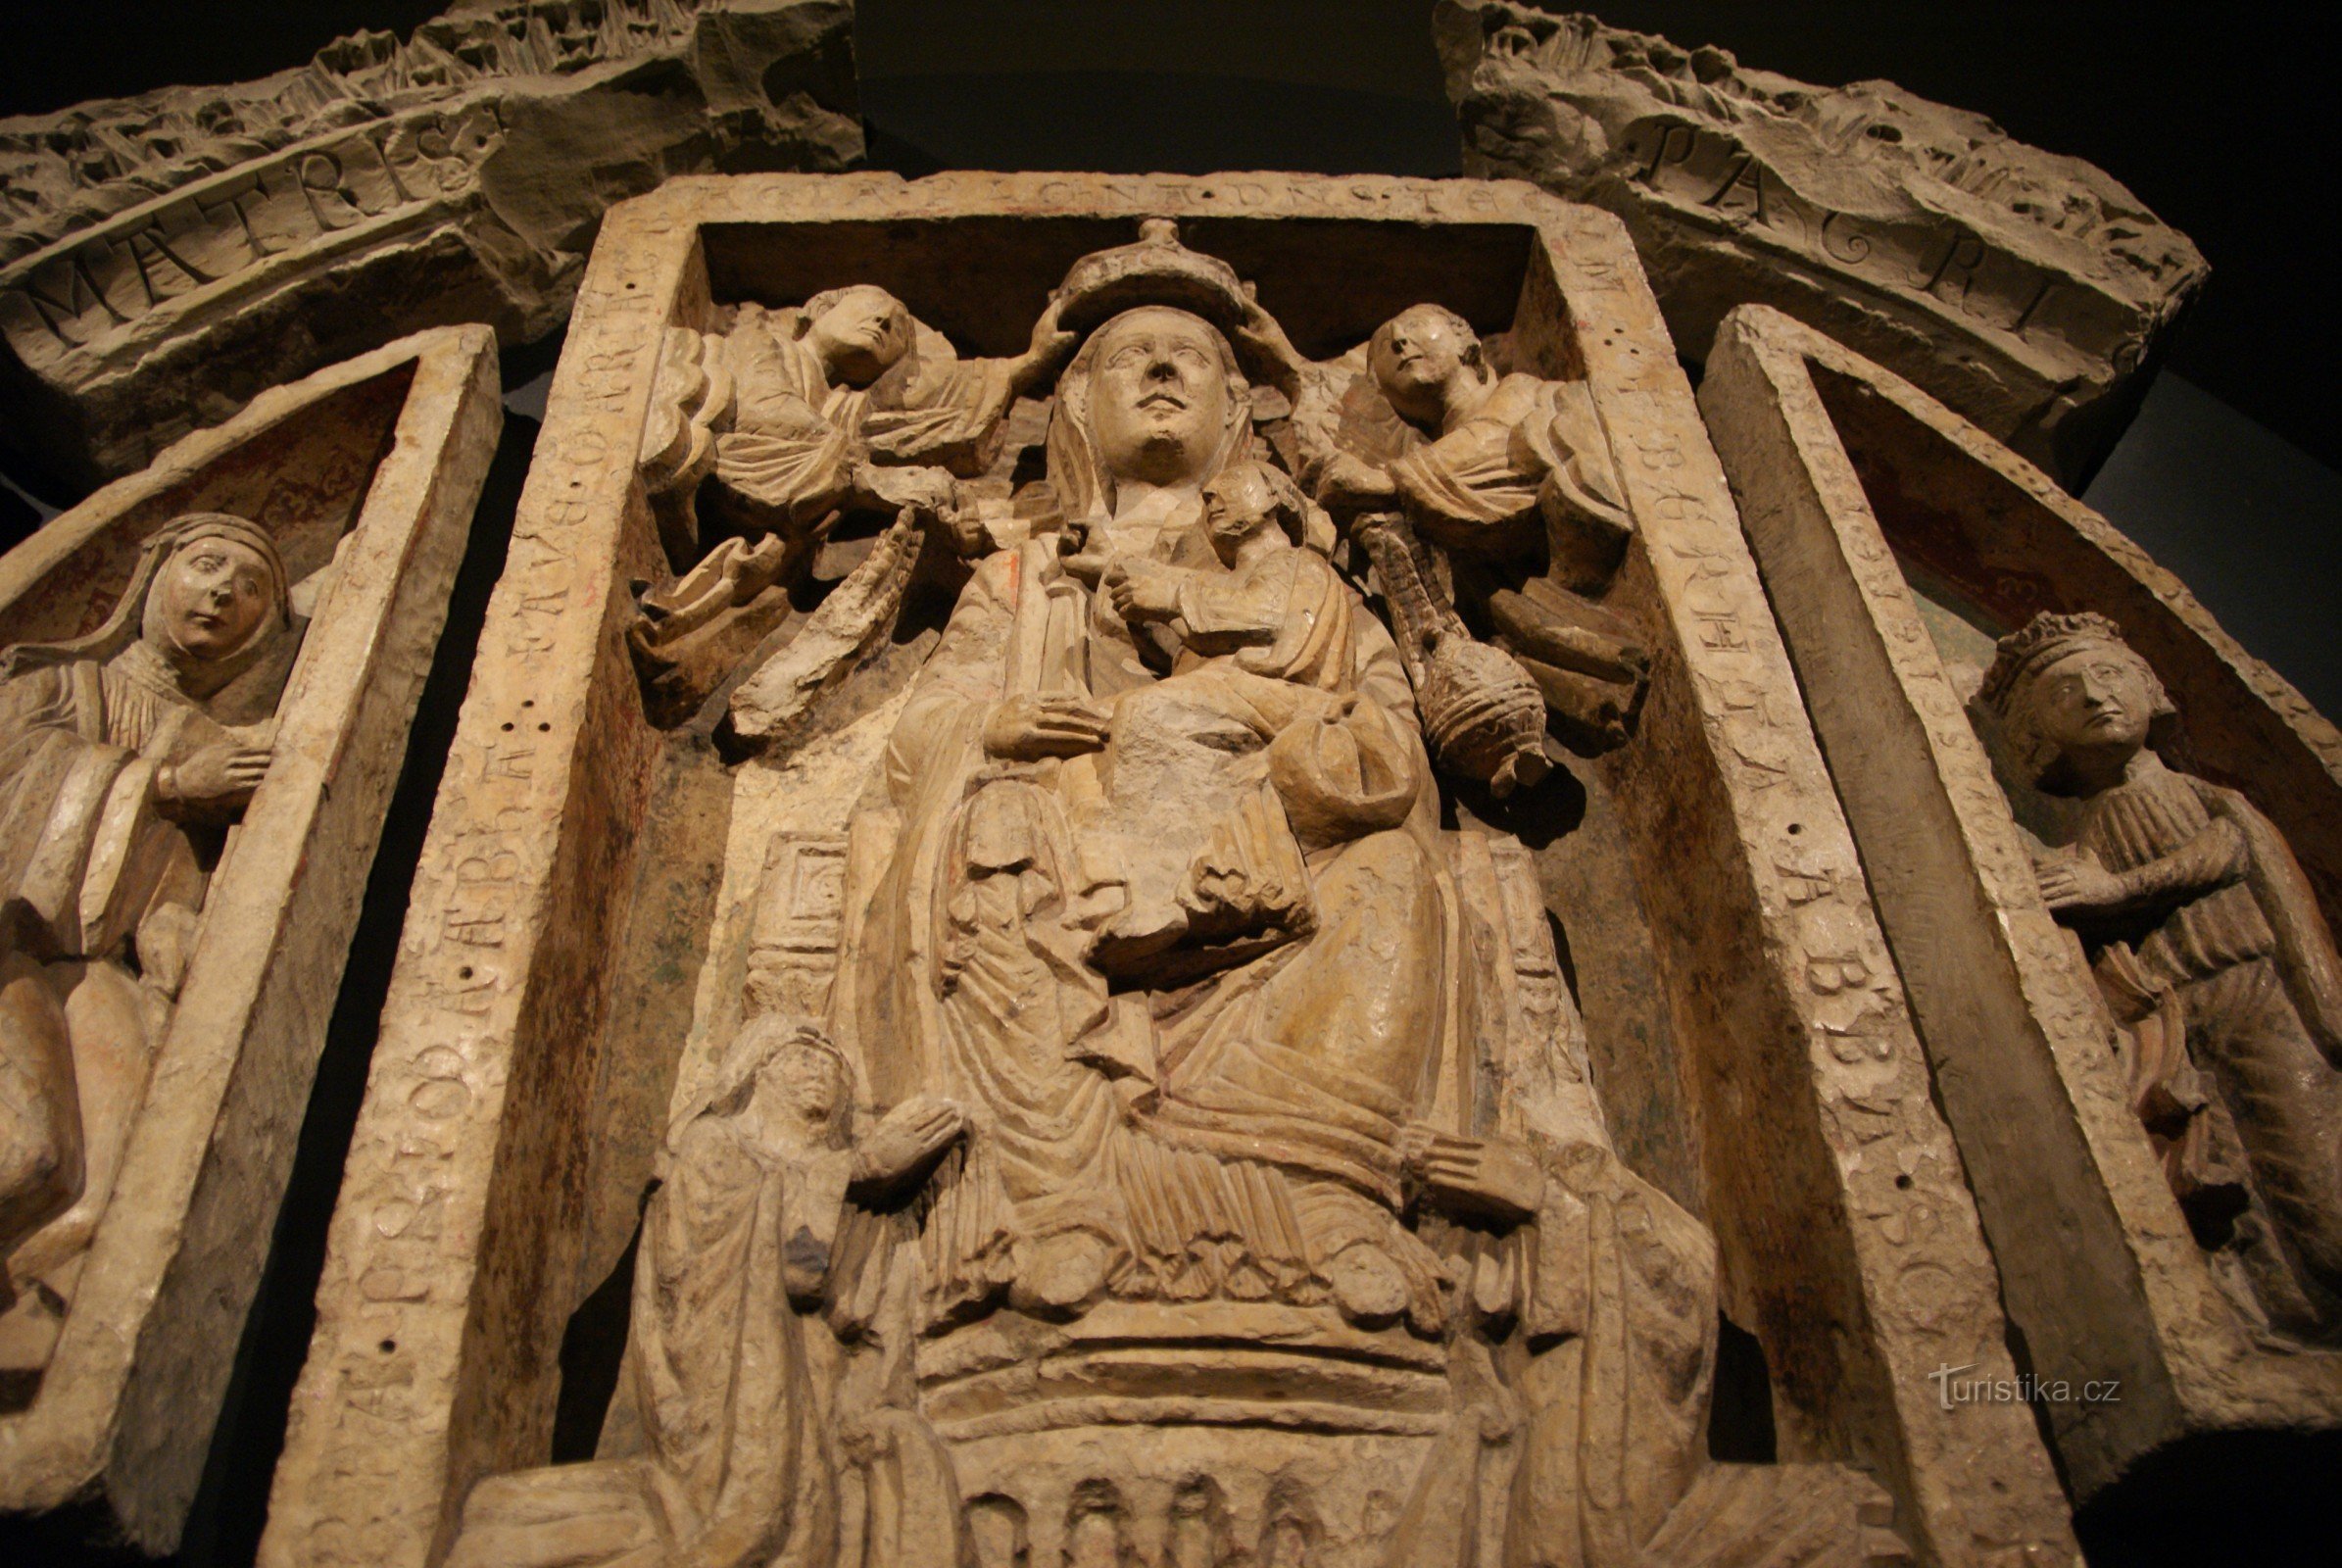 St. Georges portal